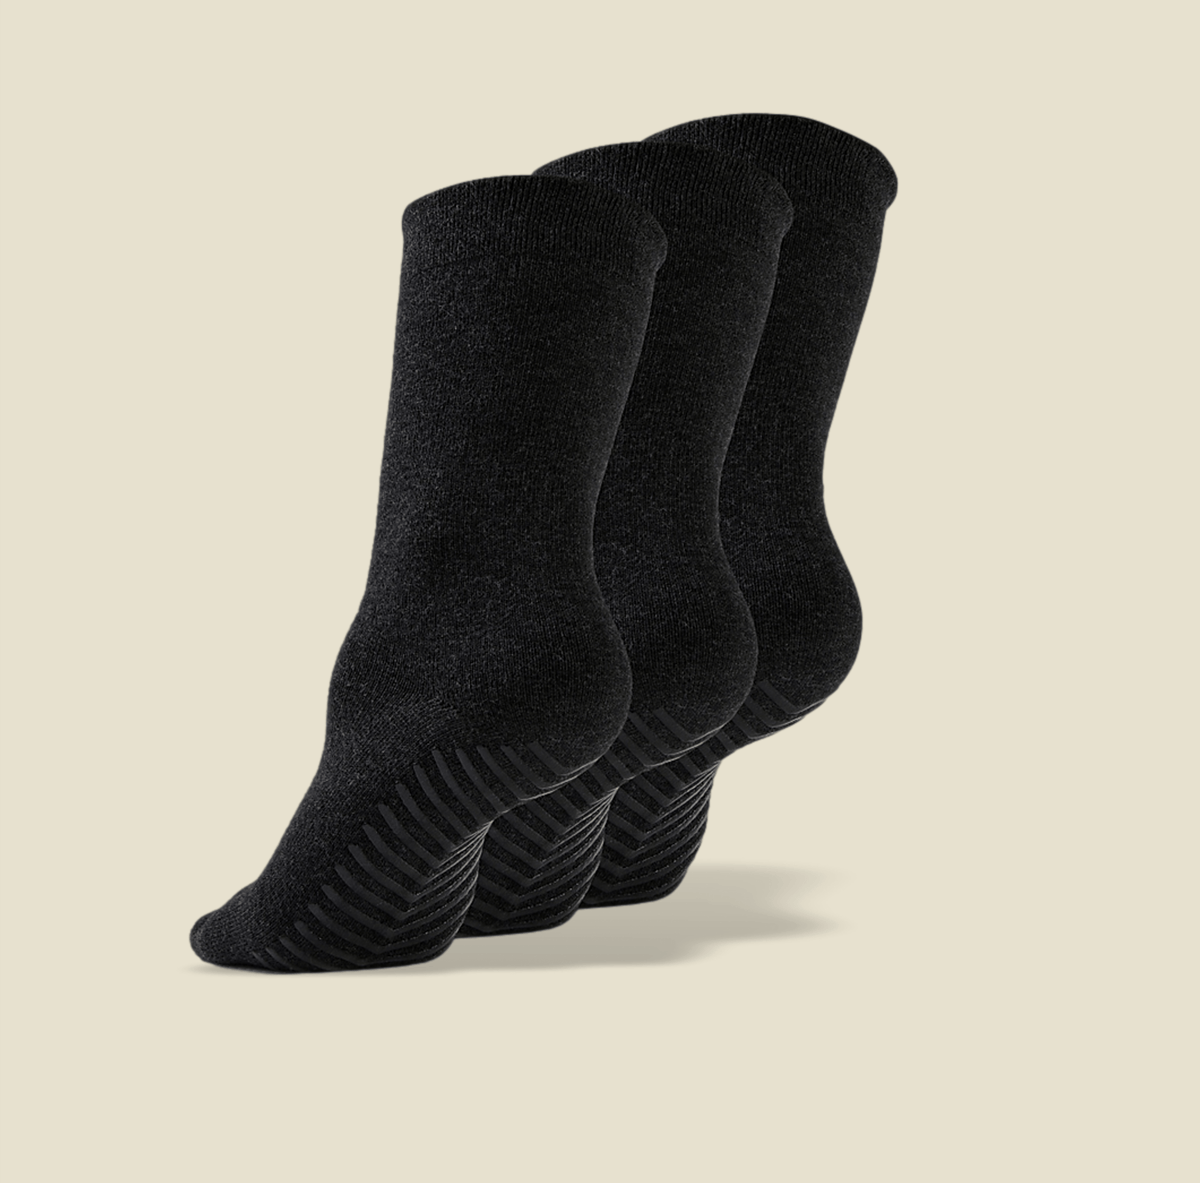 Women's Black Low Cut Ankle Non Skid Socks - 3 pairs - Gripjoy Socks